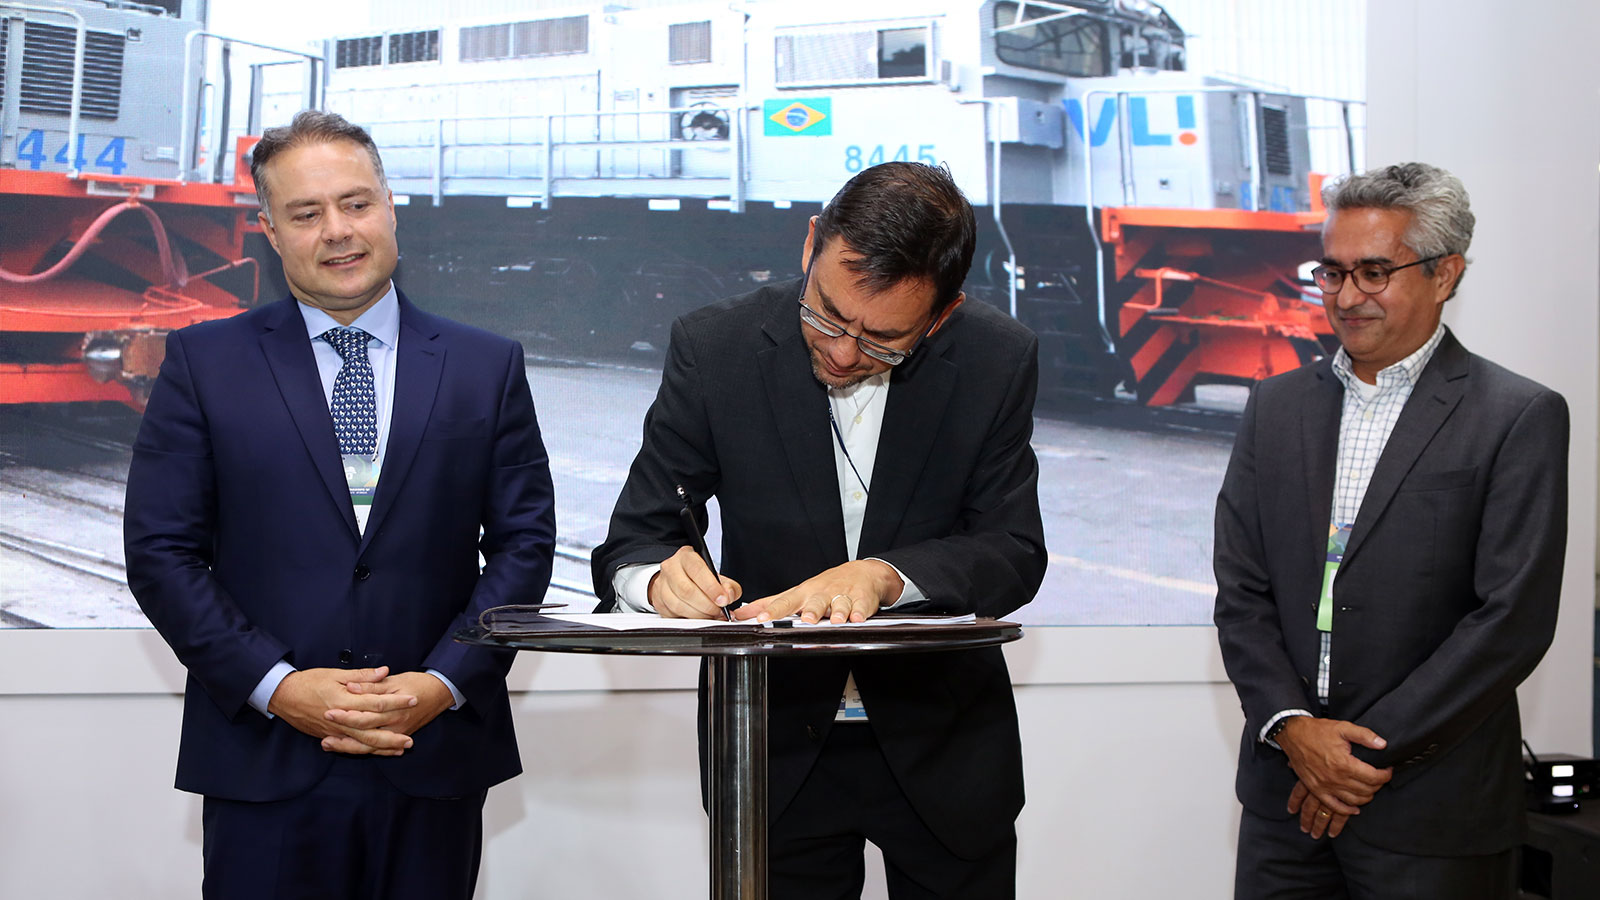 VLI Signs Contract for Nine Wabtec Locomotives